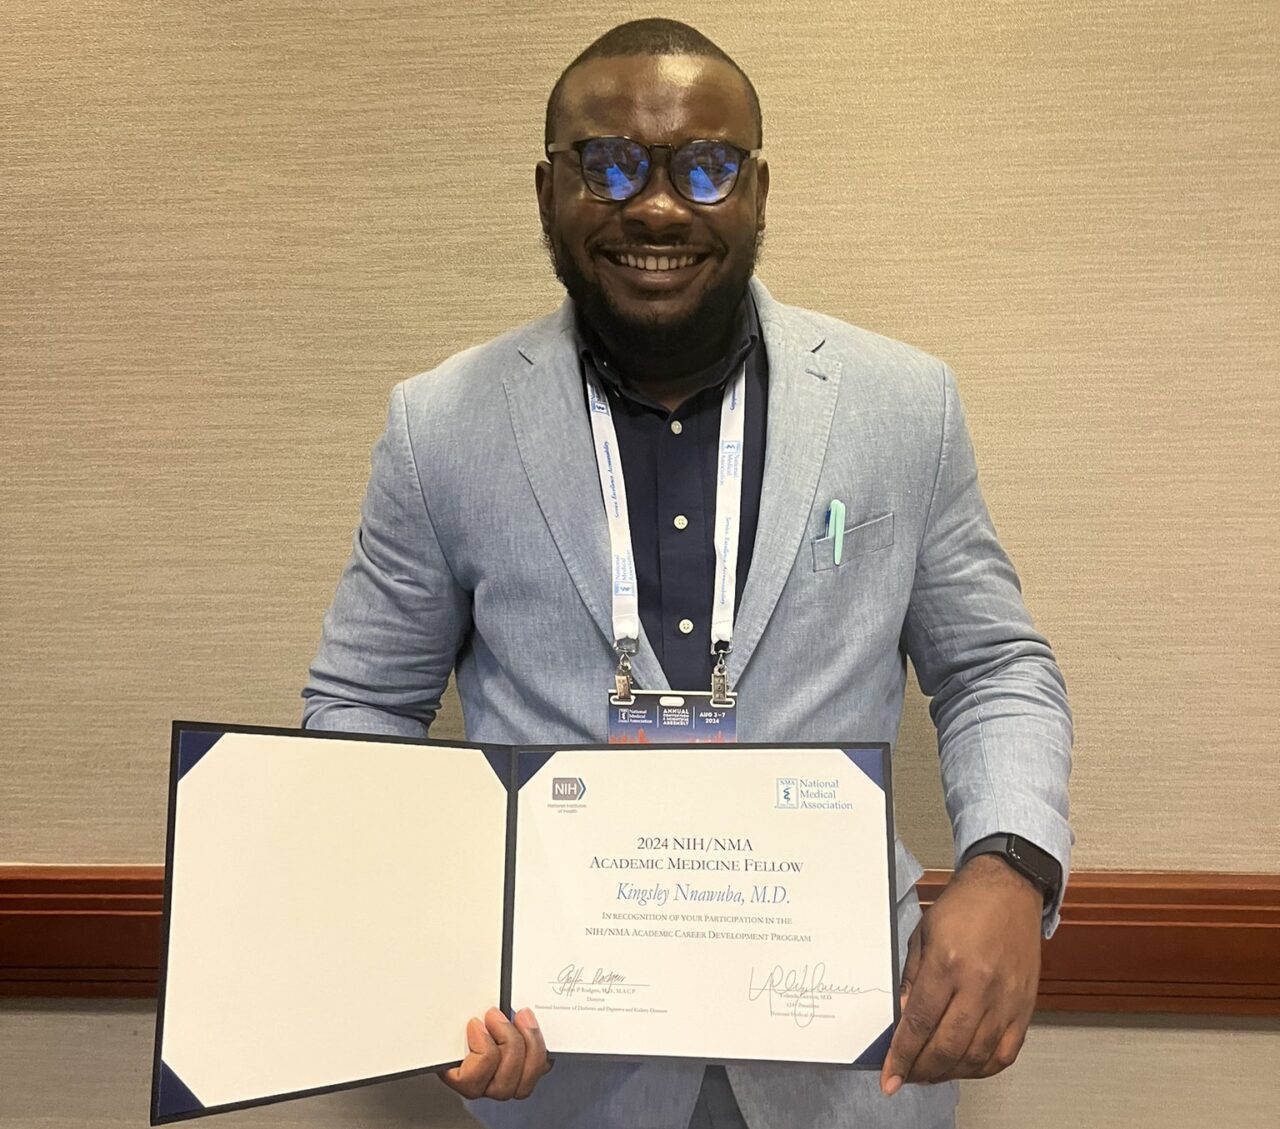 Kingsley Nnawuba was selected by the NIH for the NIH/NMA Travel Award Fellowship 2024